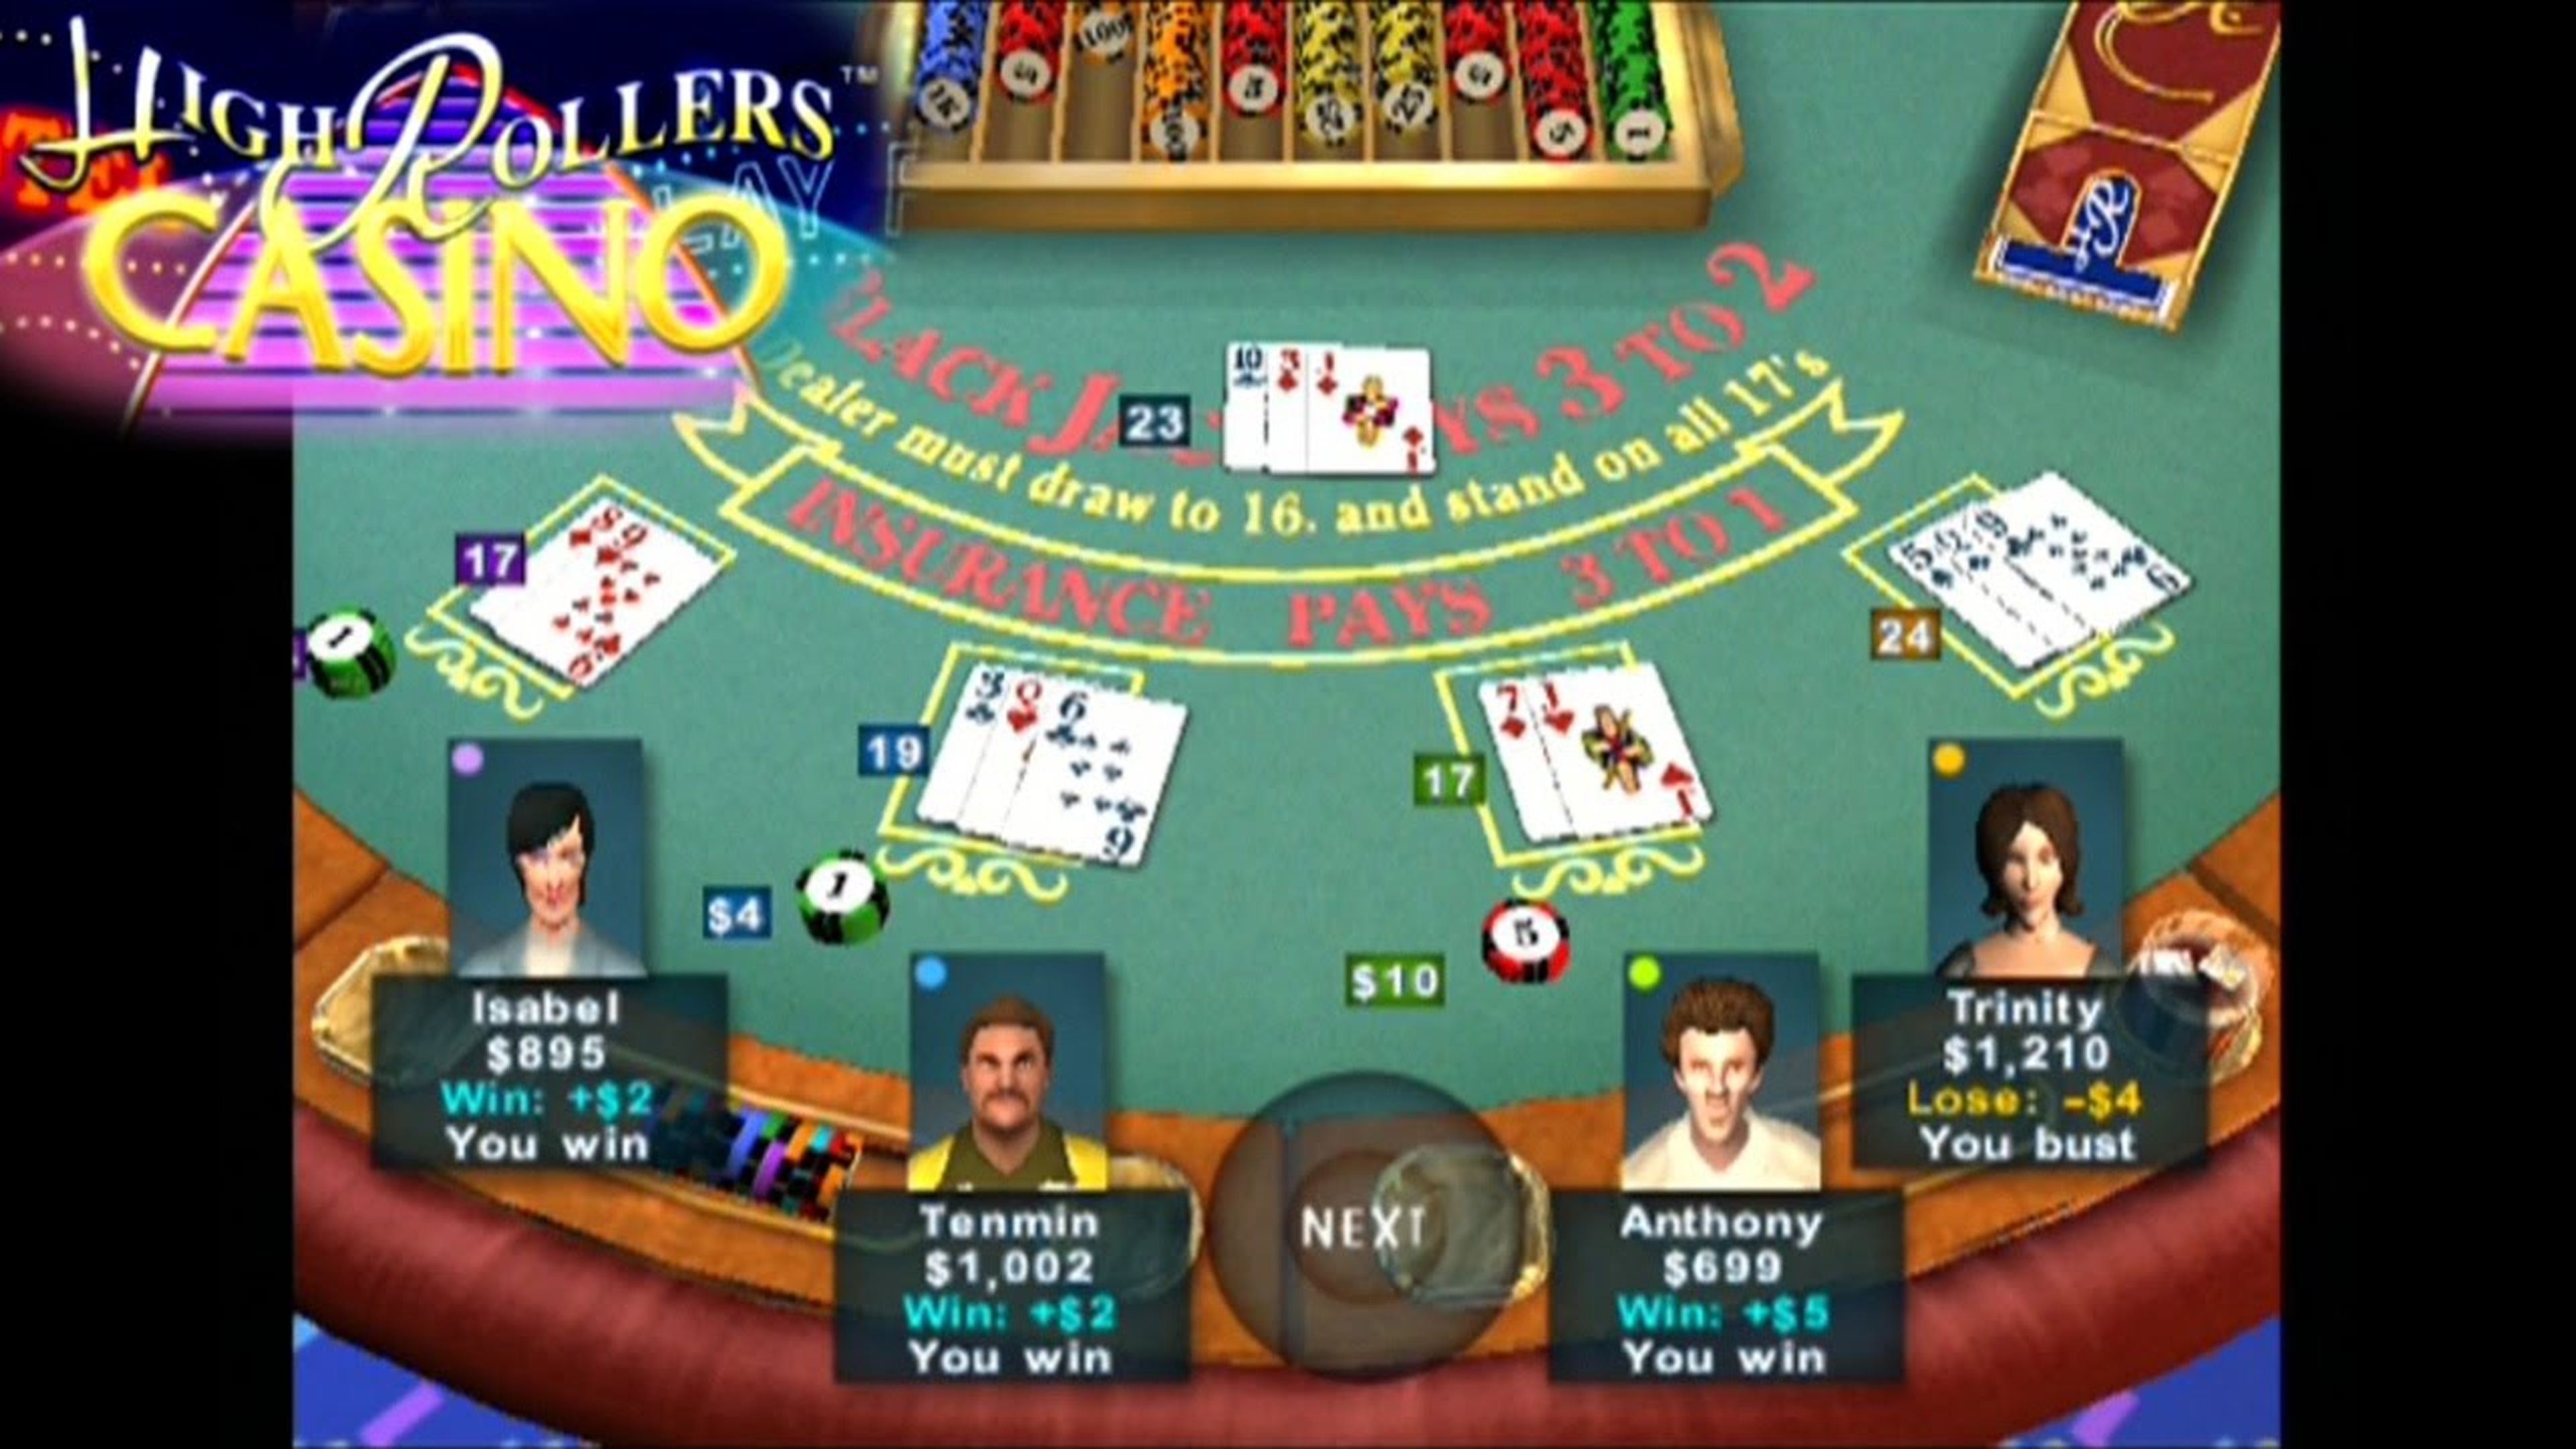 High rollers casino